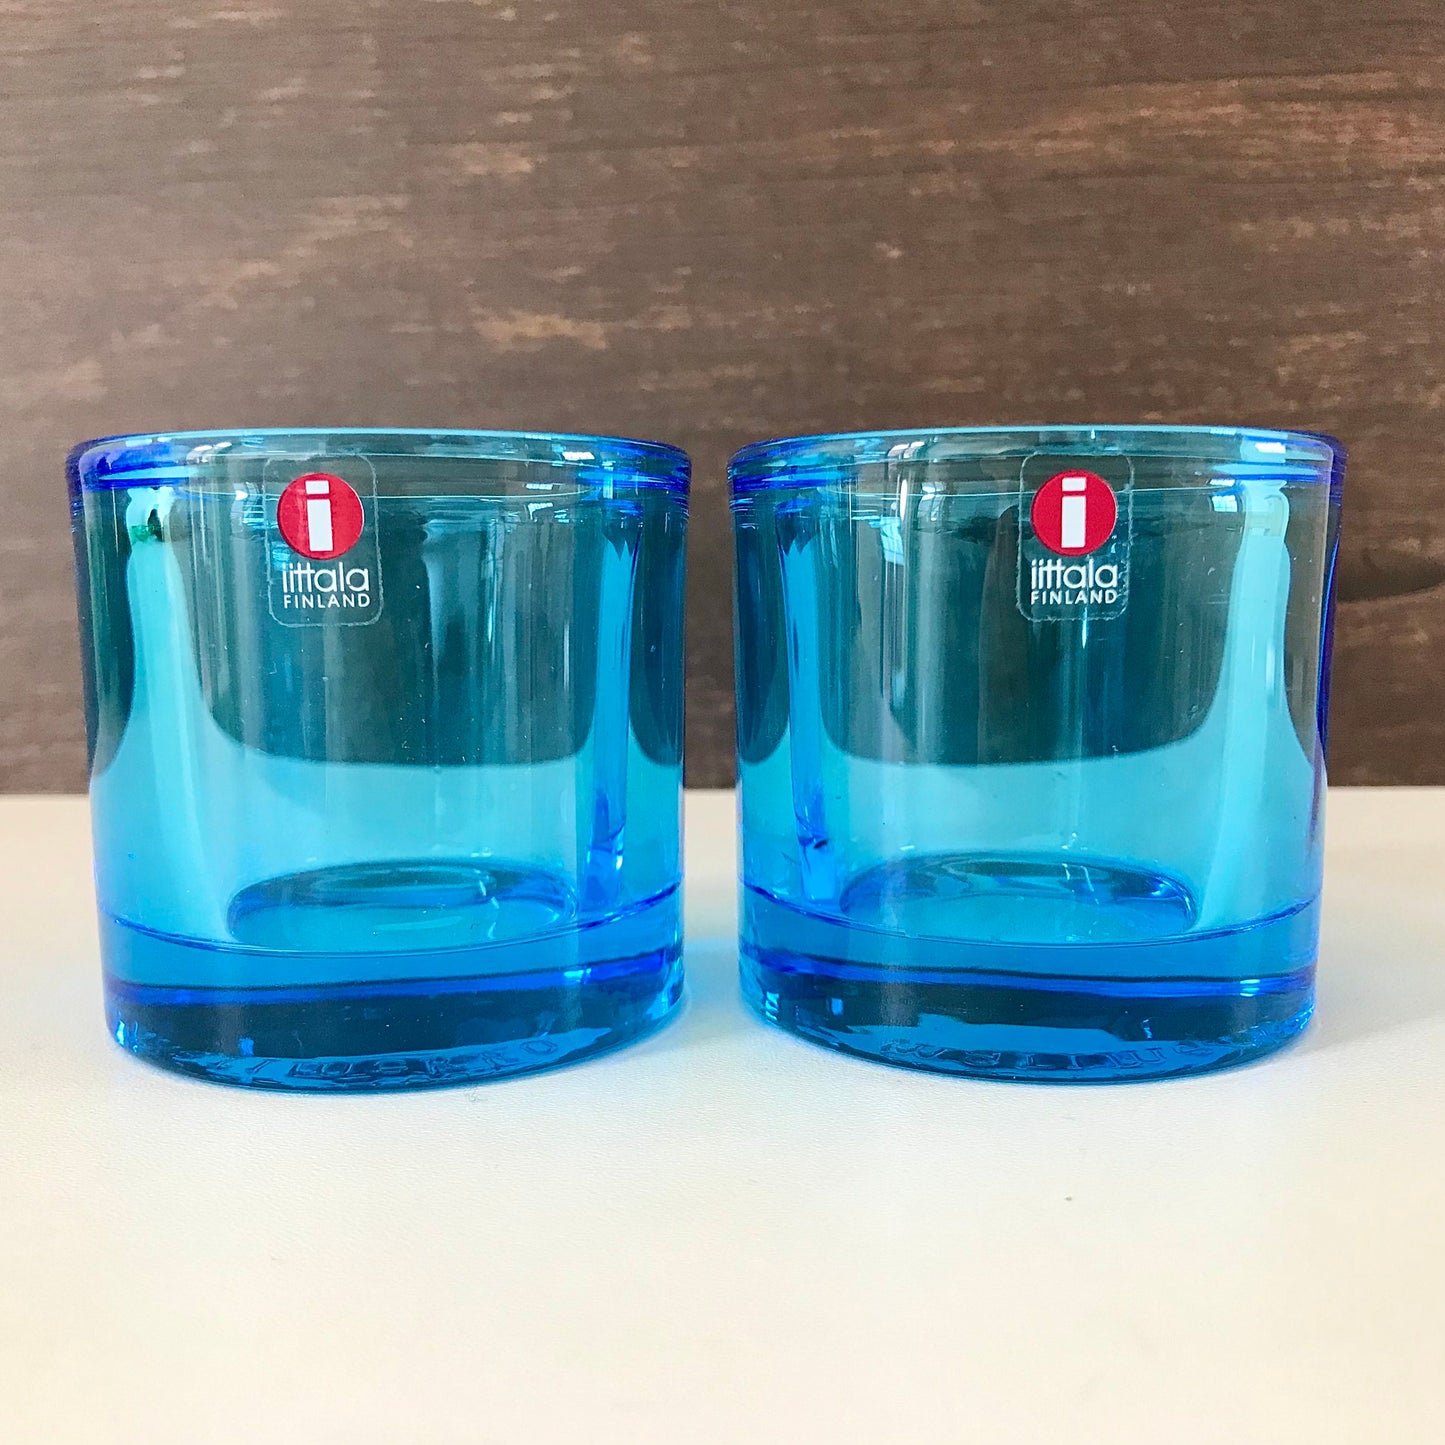 Iittala Kivi Teal Blue Glass Candle Tealight Holder Votive Finnish Design Turquoise